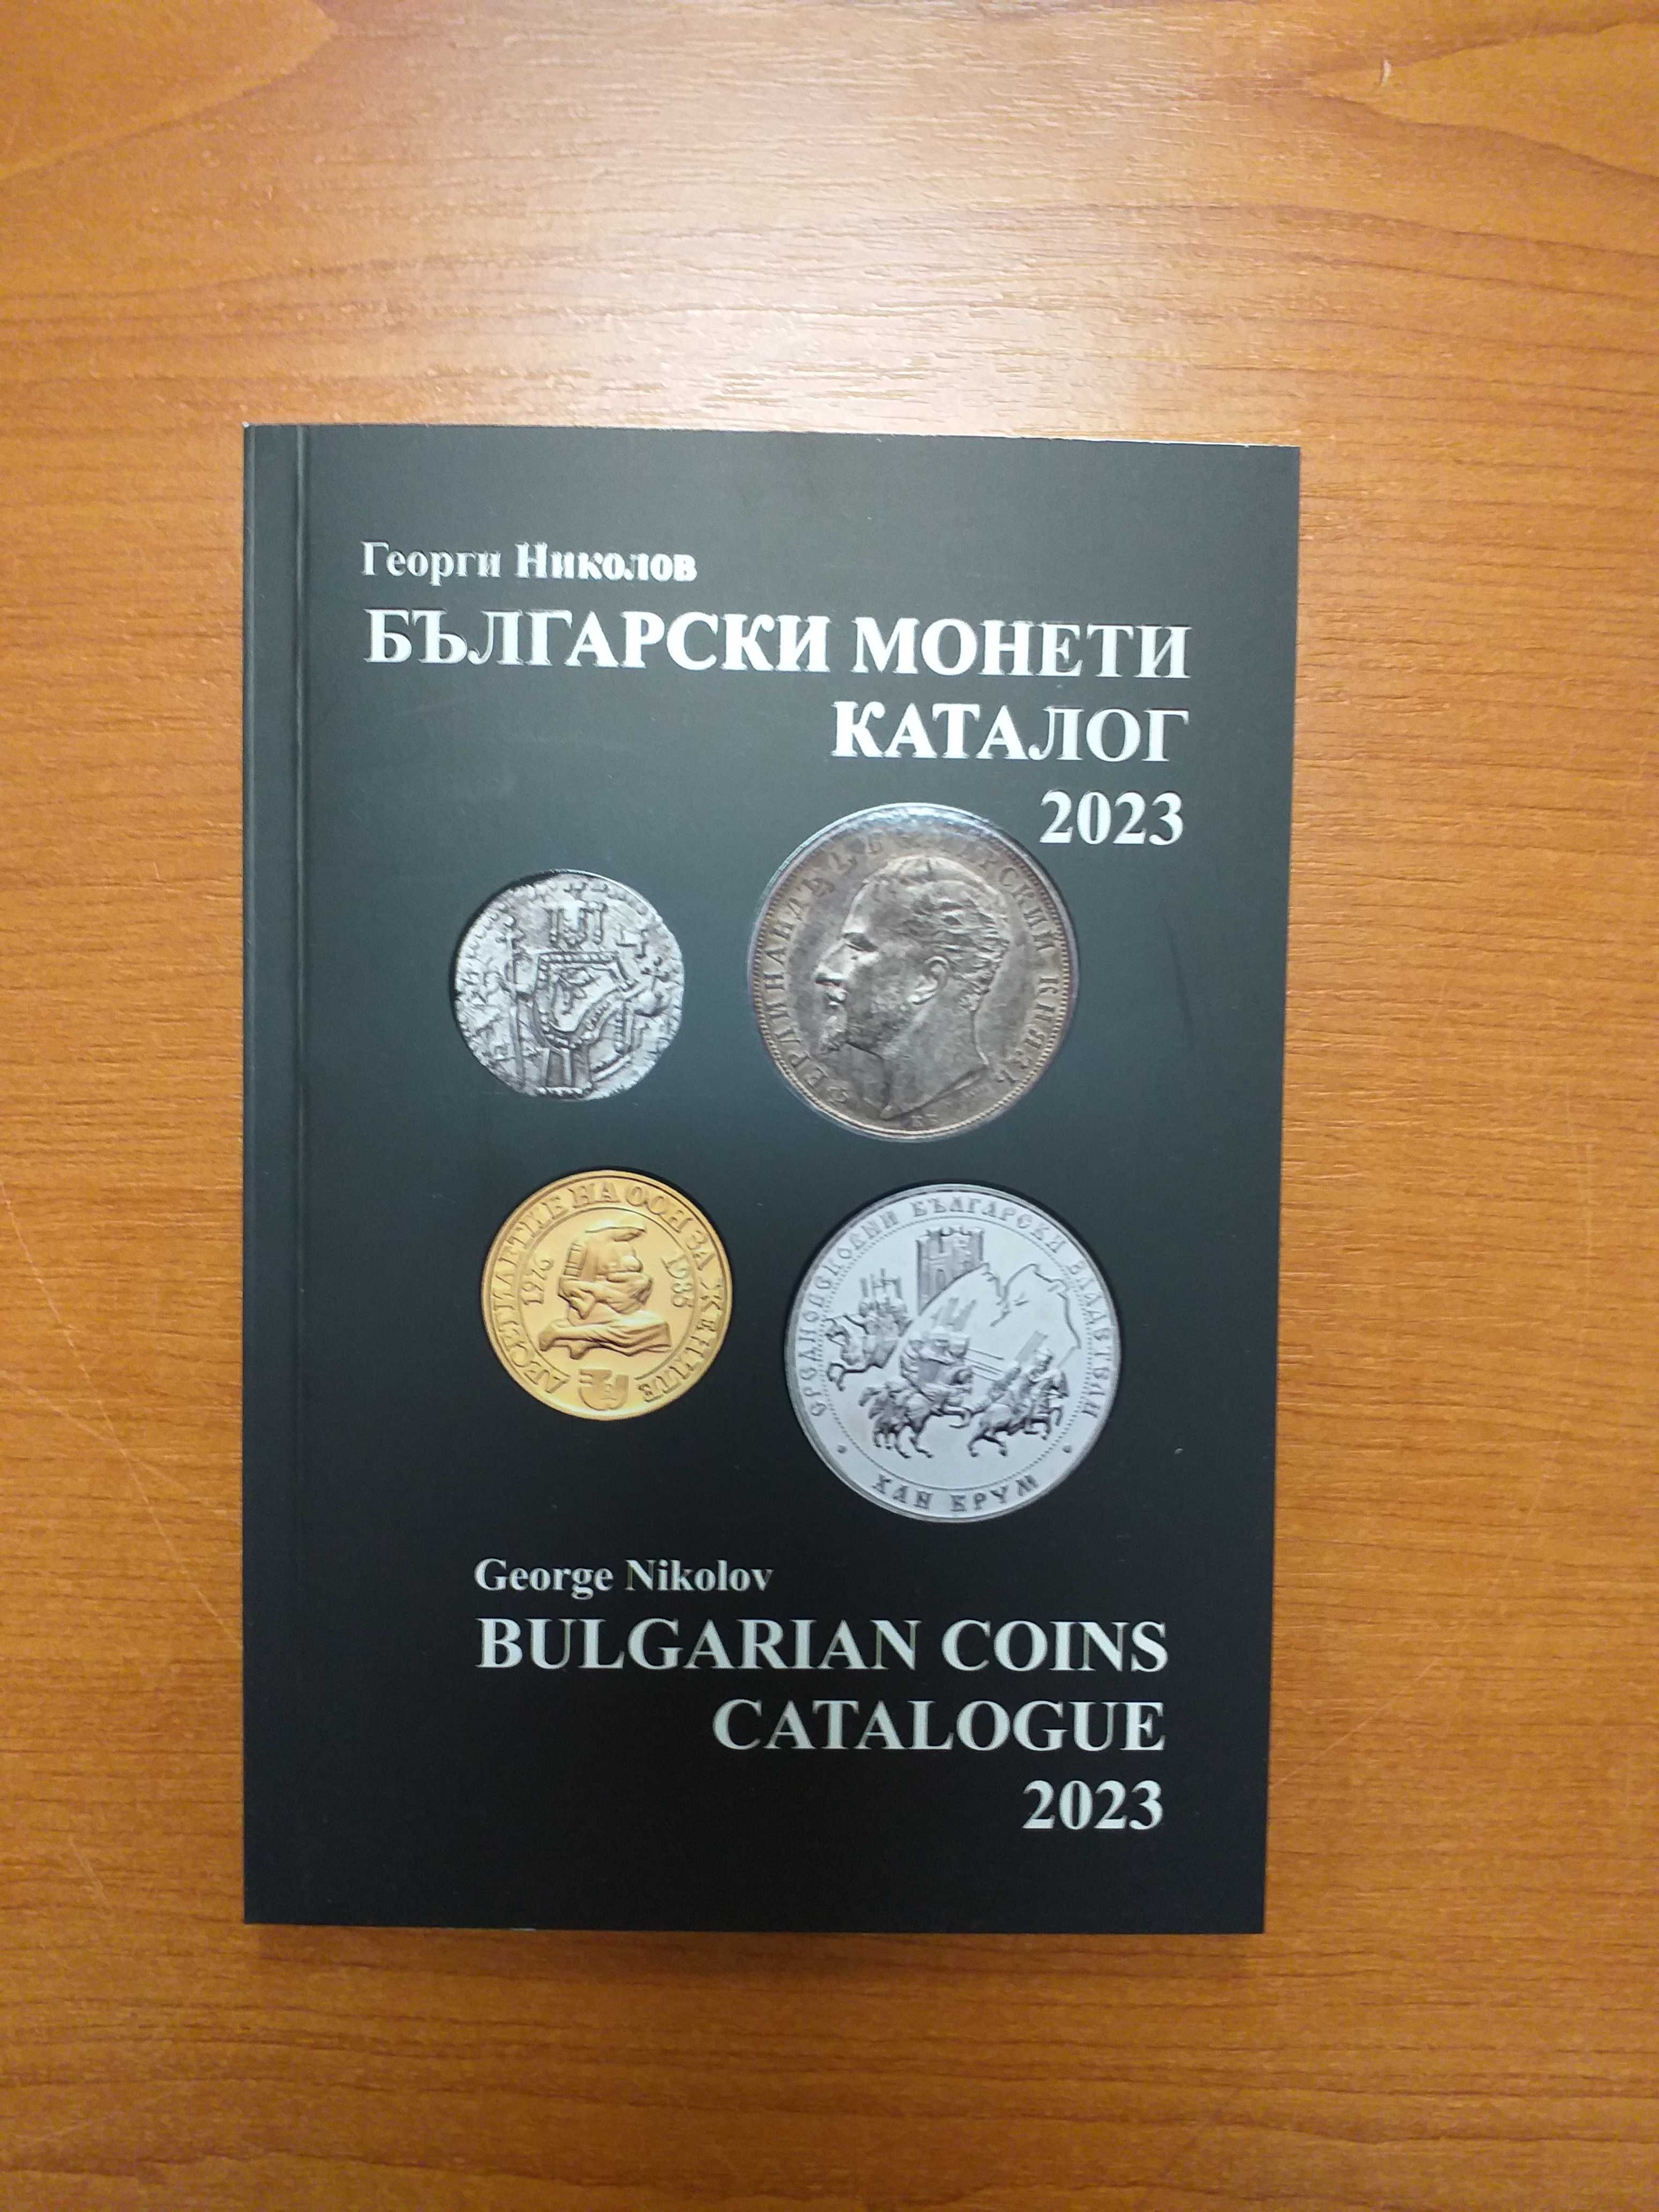 Нов каталог 2023 г.Български монети 10 лв., Георги Николов